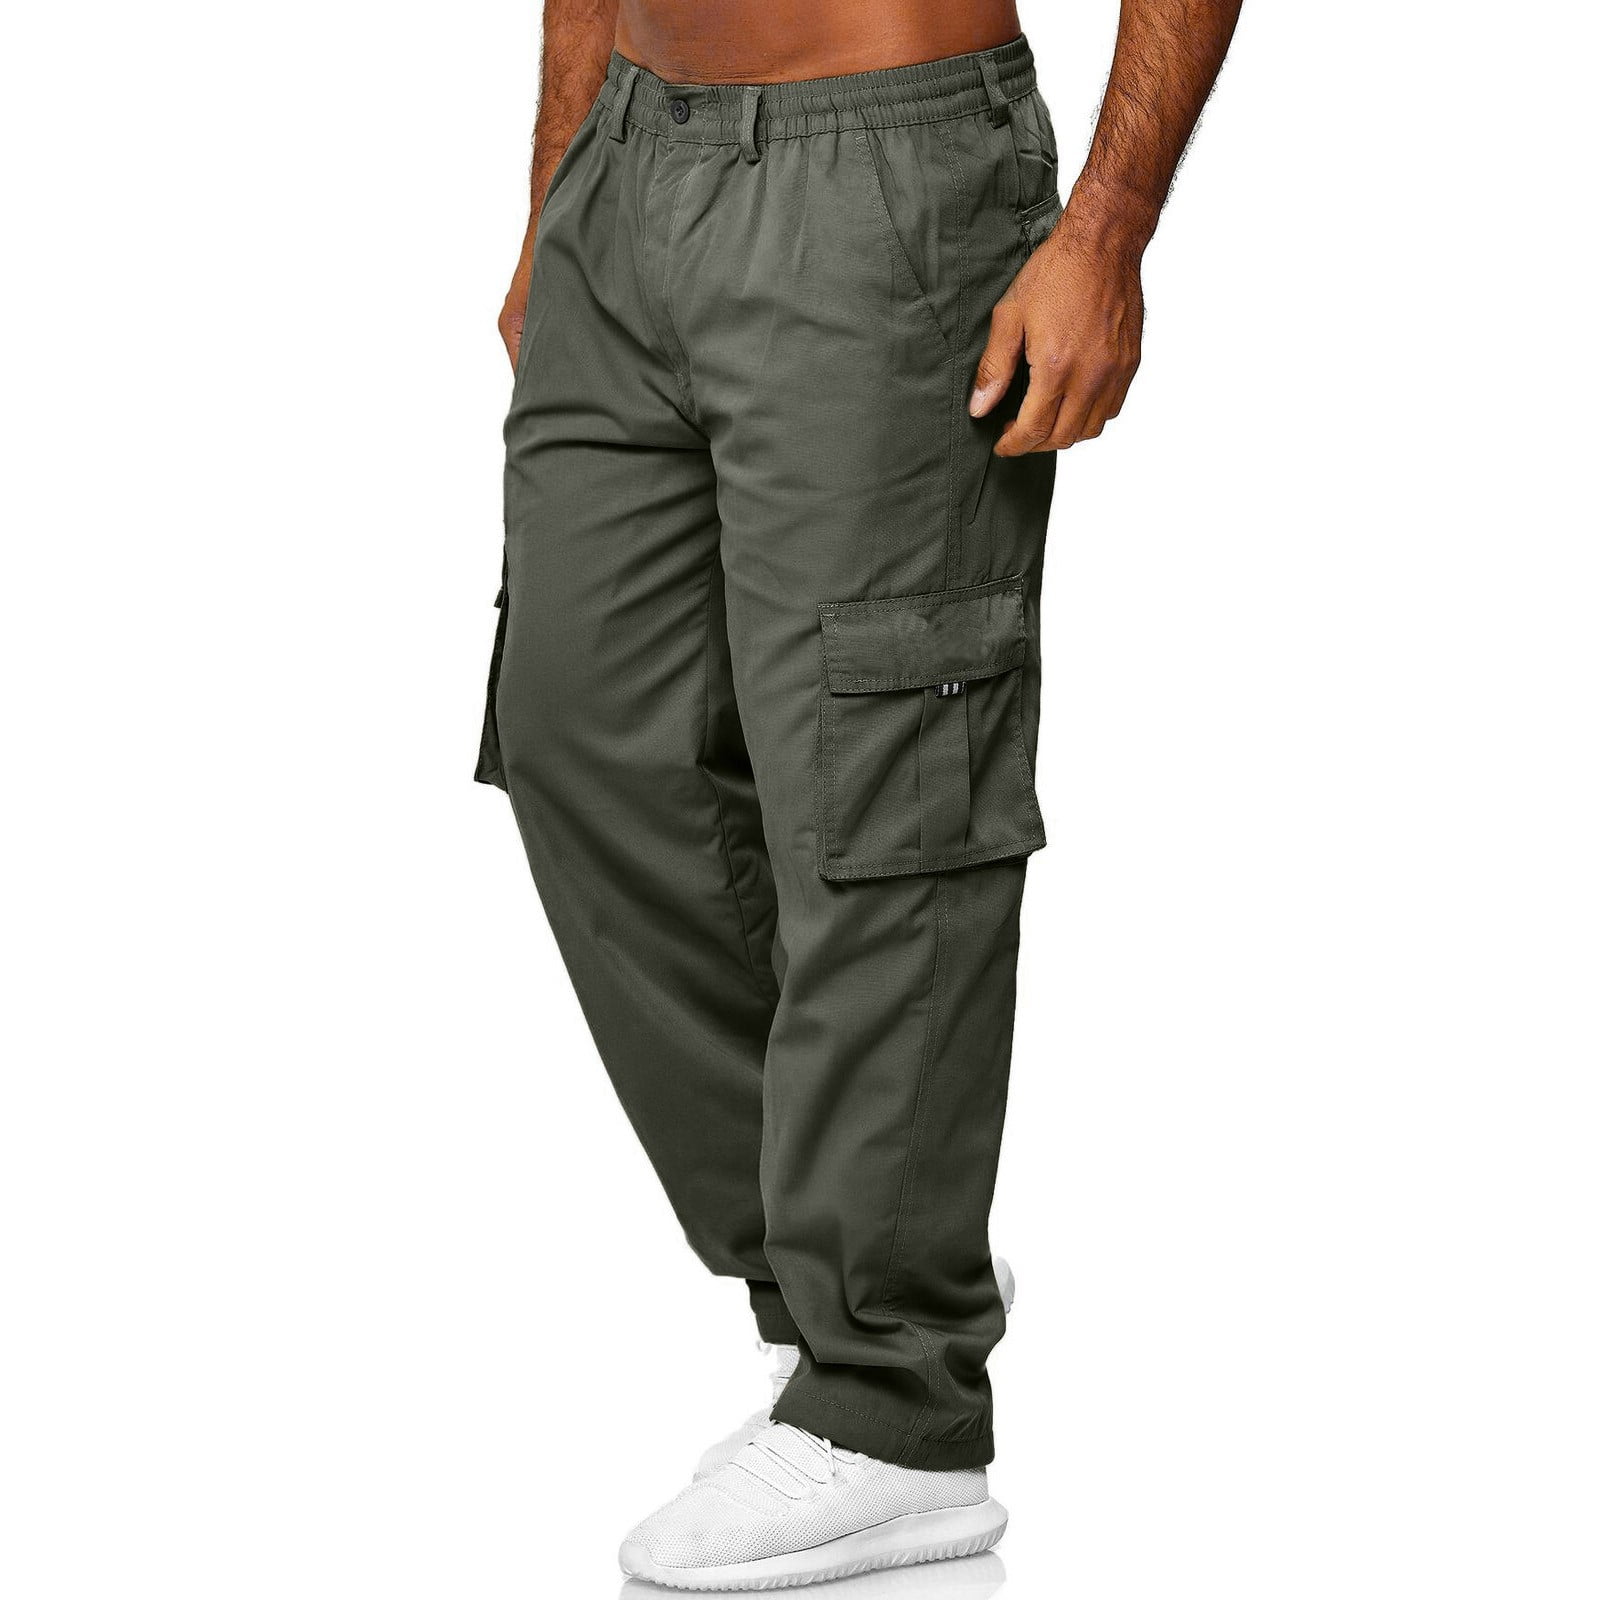 Aayomet Work Pants For Men Men's Cotton Yoga Sweatpants Exercise Pants Open  Bottom Lounge Pants Loose Male Sweat Pants with Pockets,Green XXL